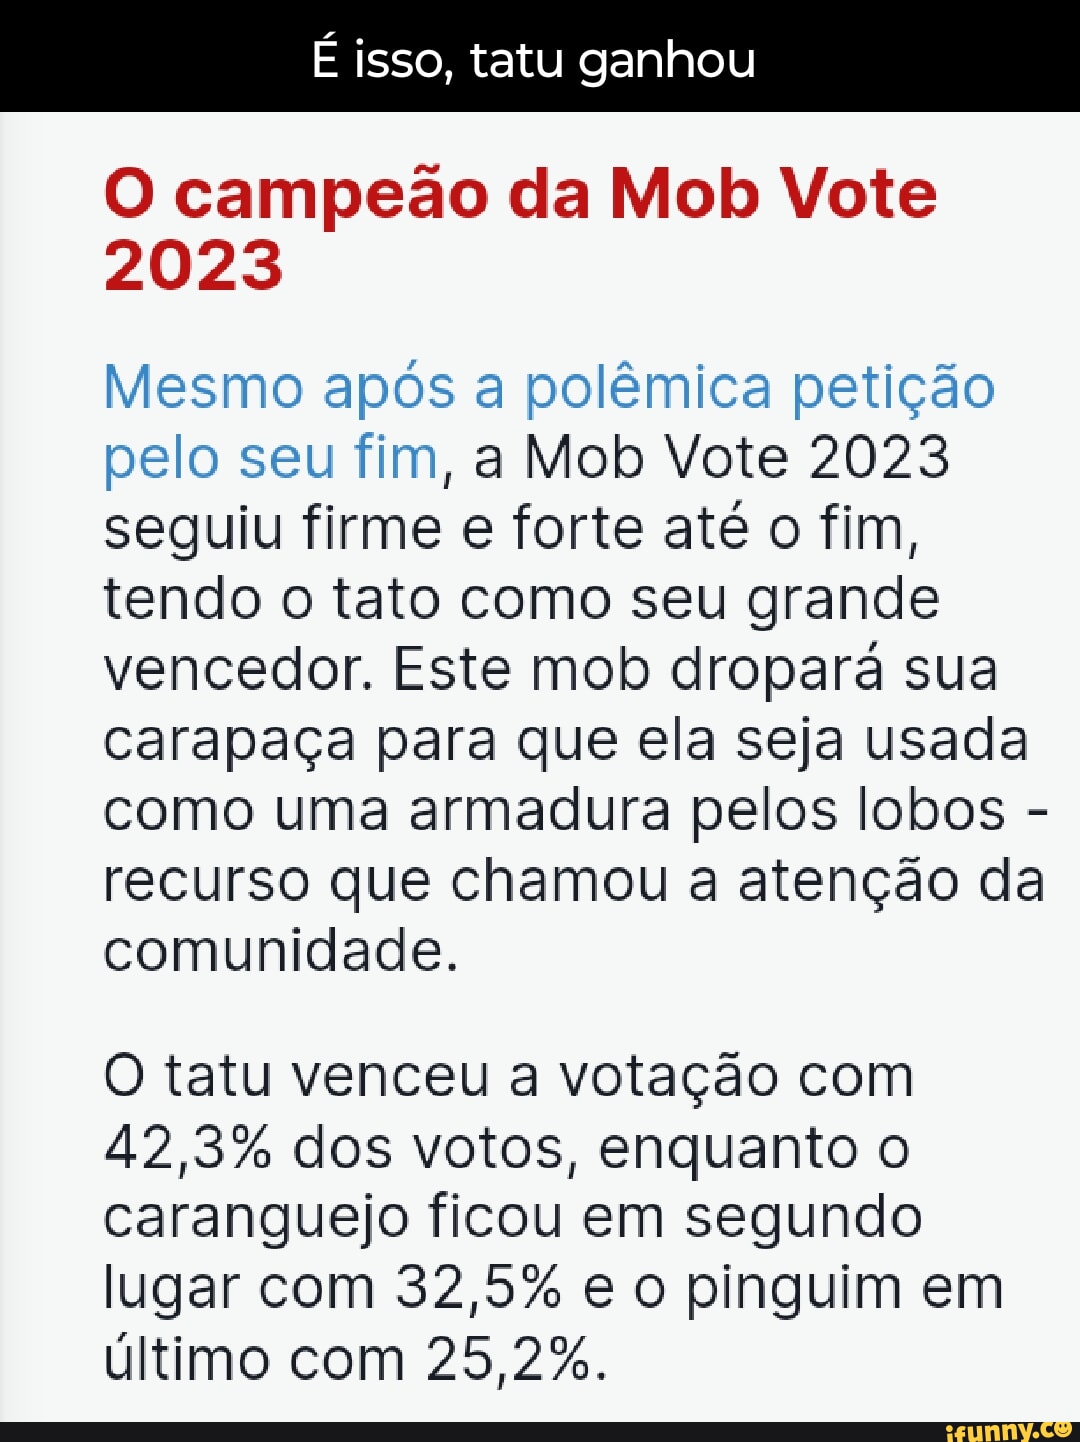 Minecraft mob vote 2024 - iFunny Brazil